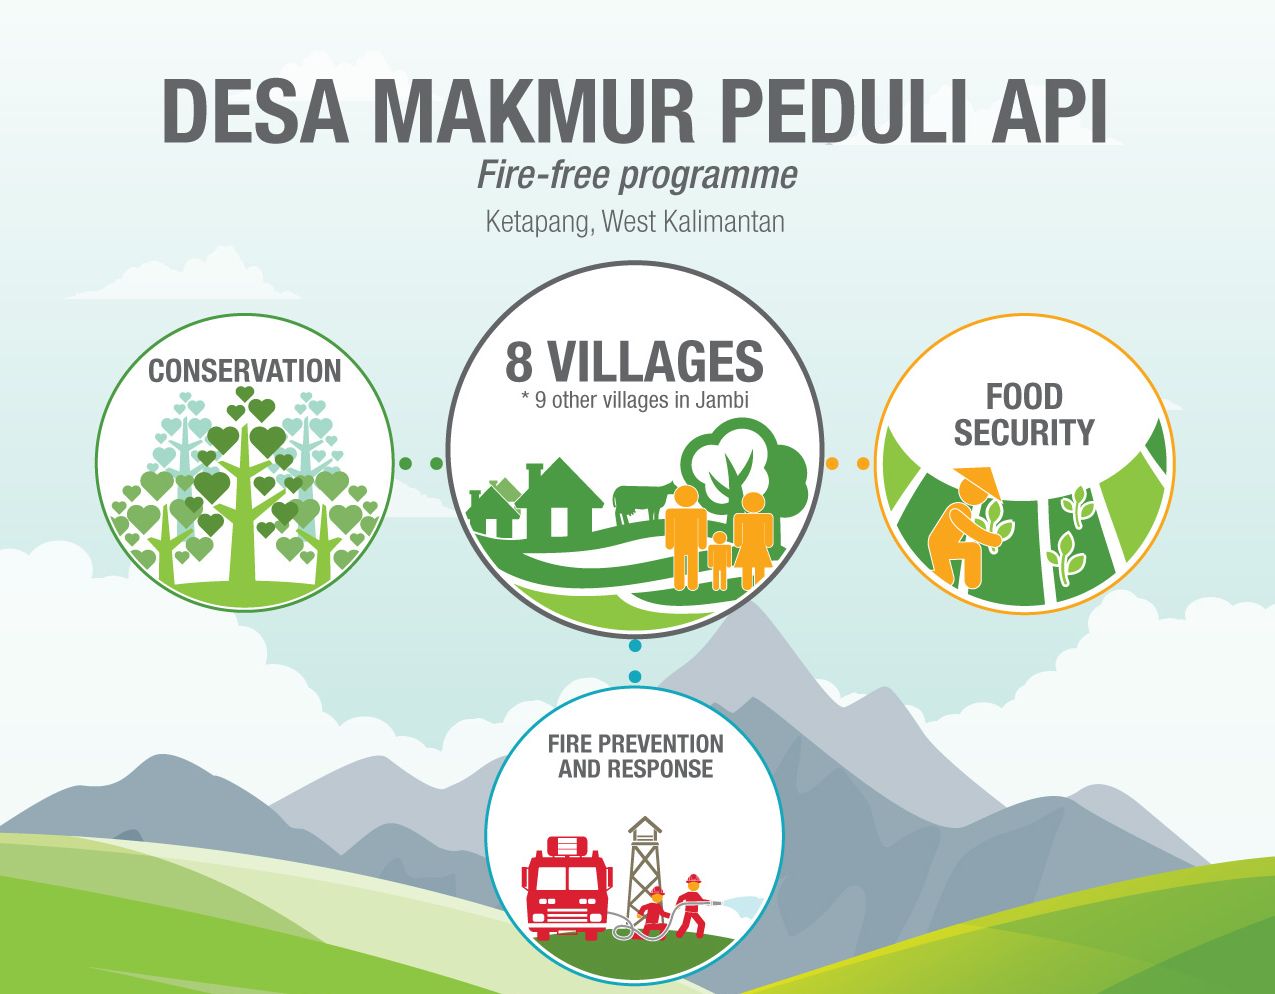 Desa Makmur Peduli Api: Fire-free programme bears fruit in Kalimantan